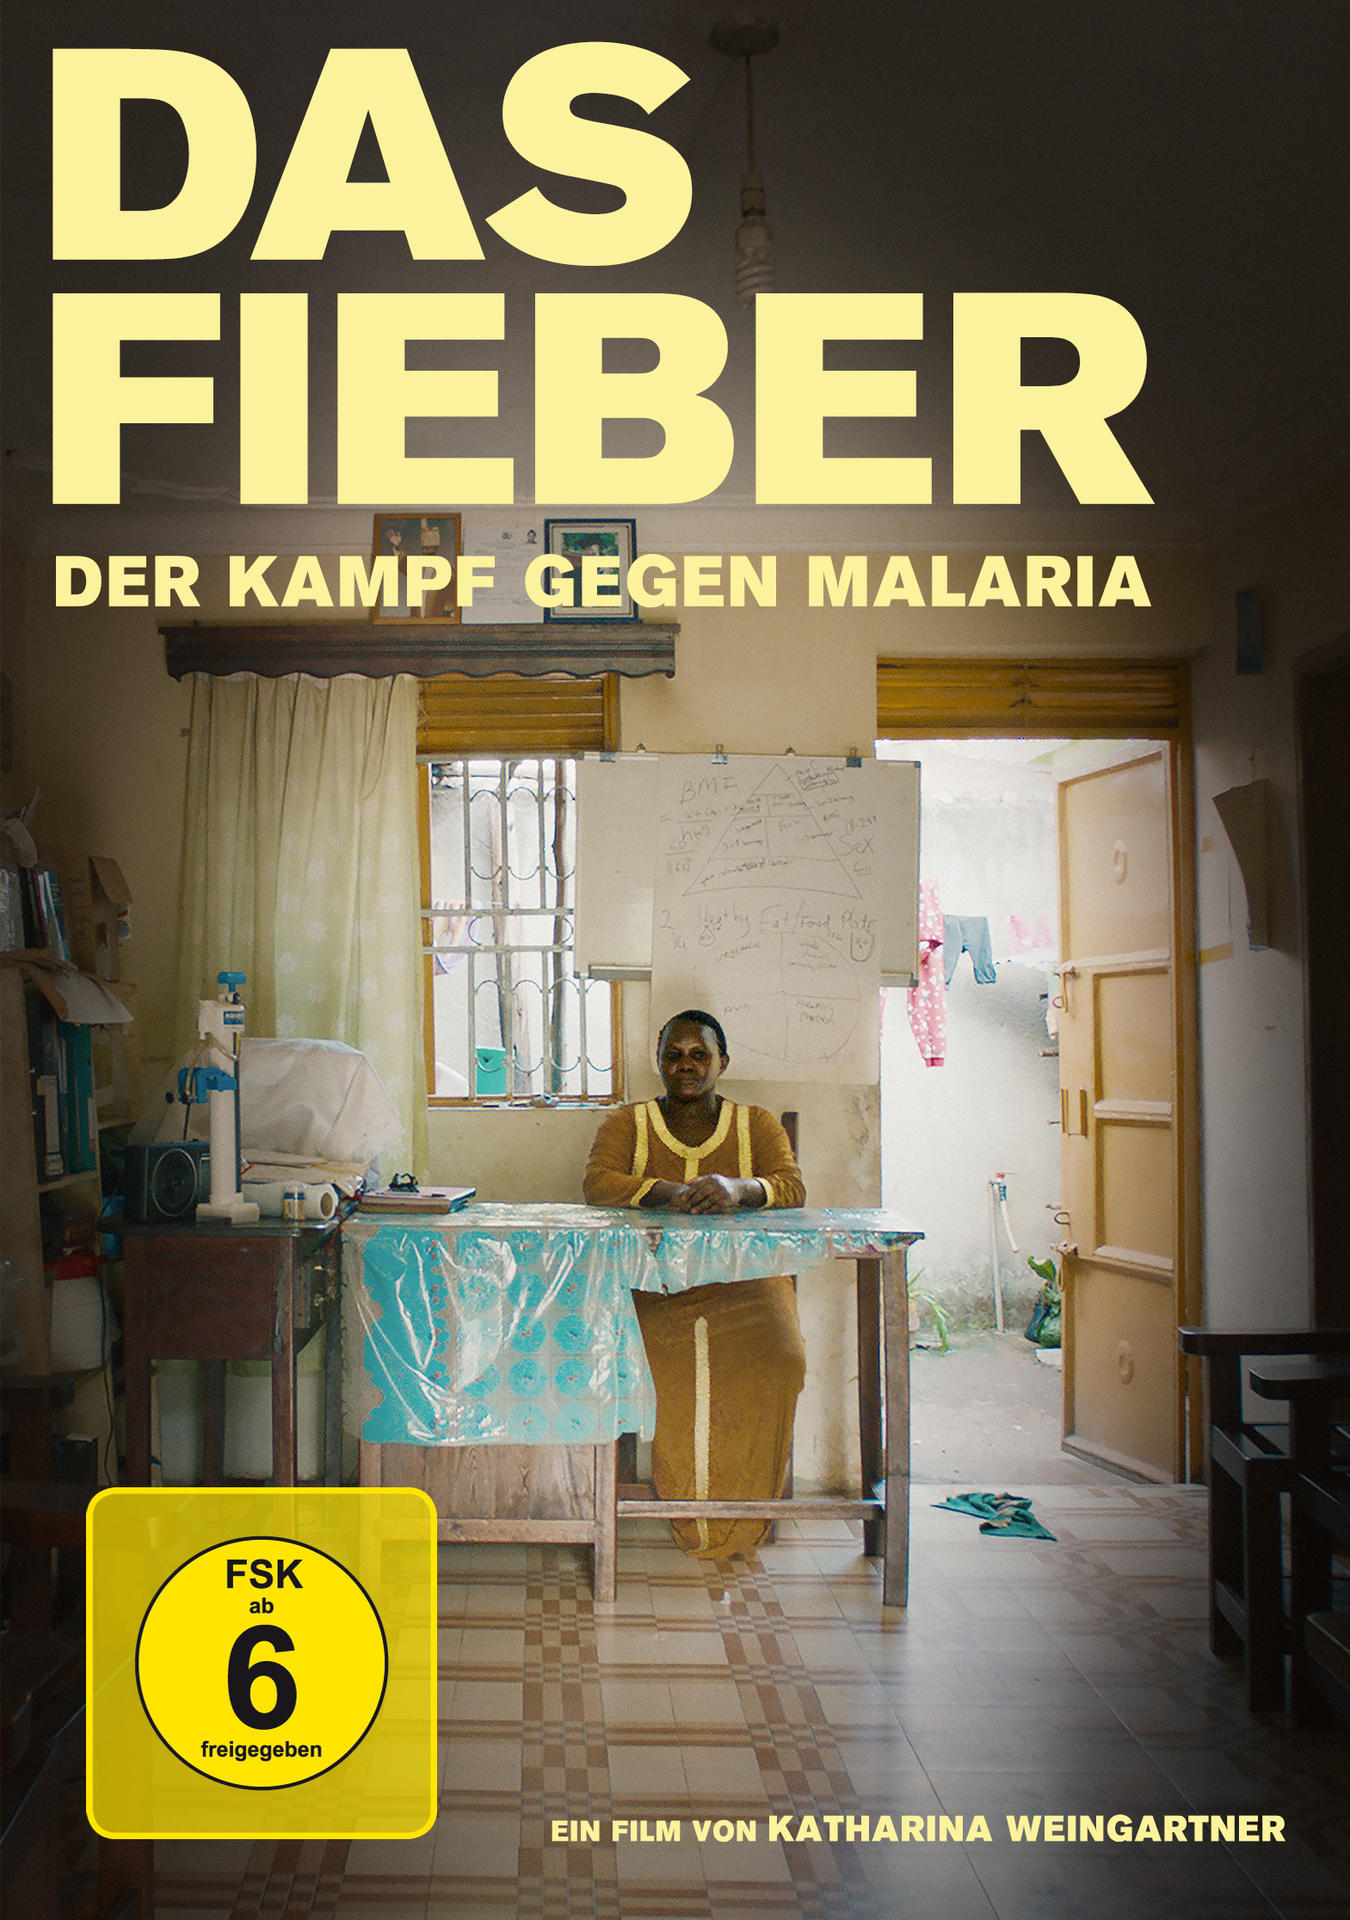 Das Fieber - Kampf Der gegen Malaria DVD